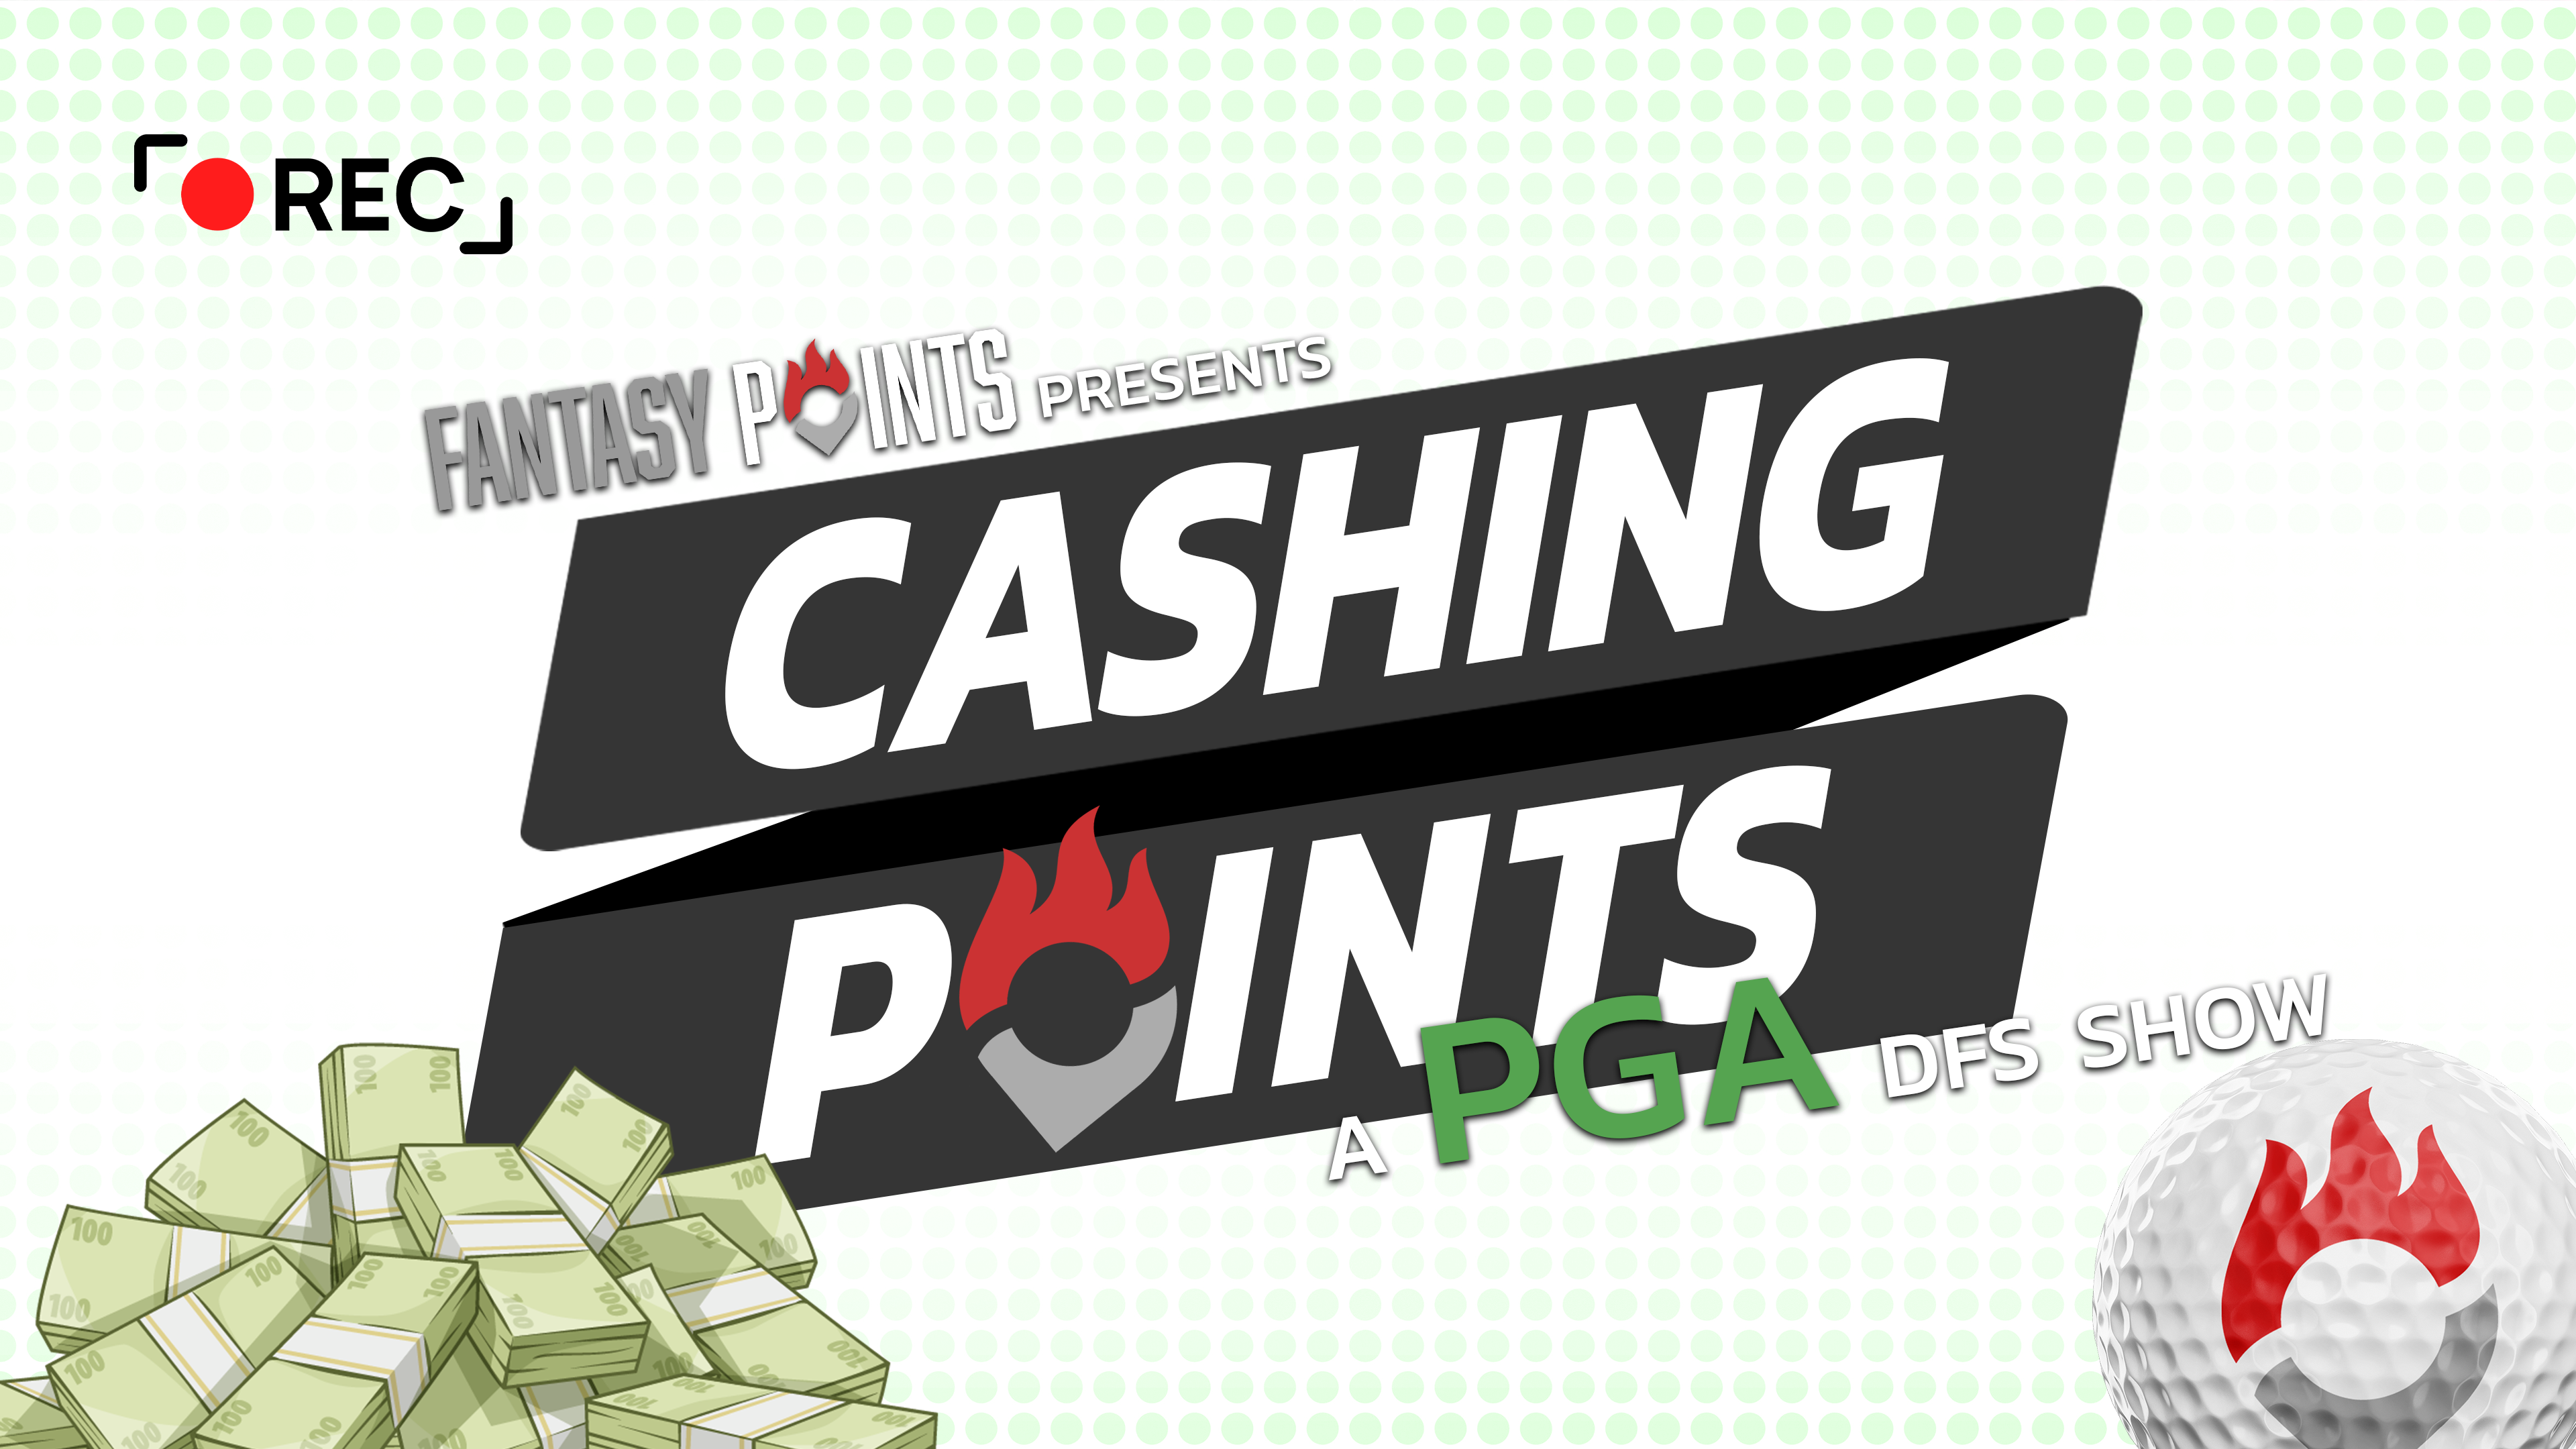 Cashing Points